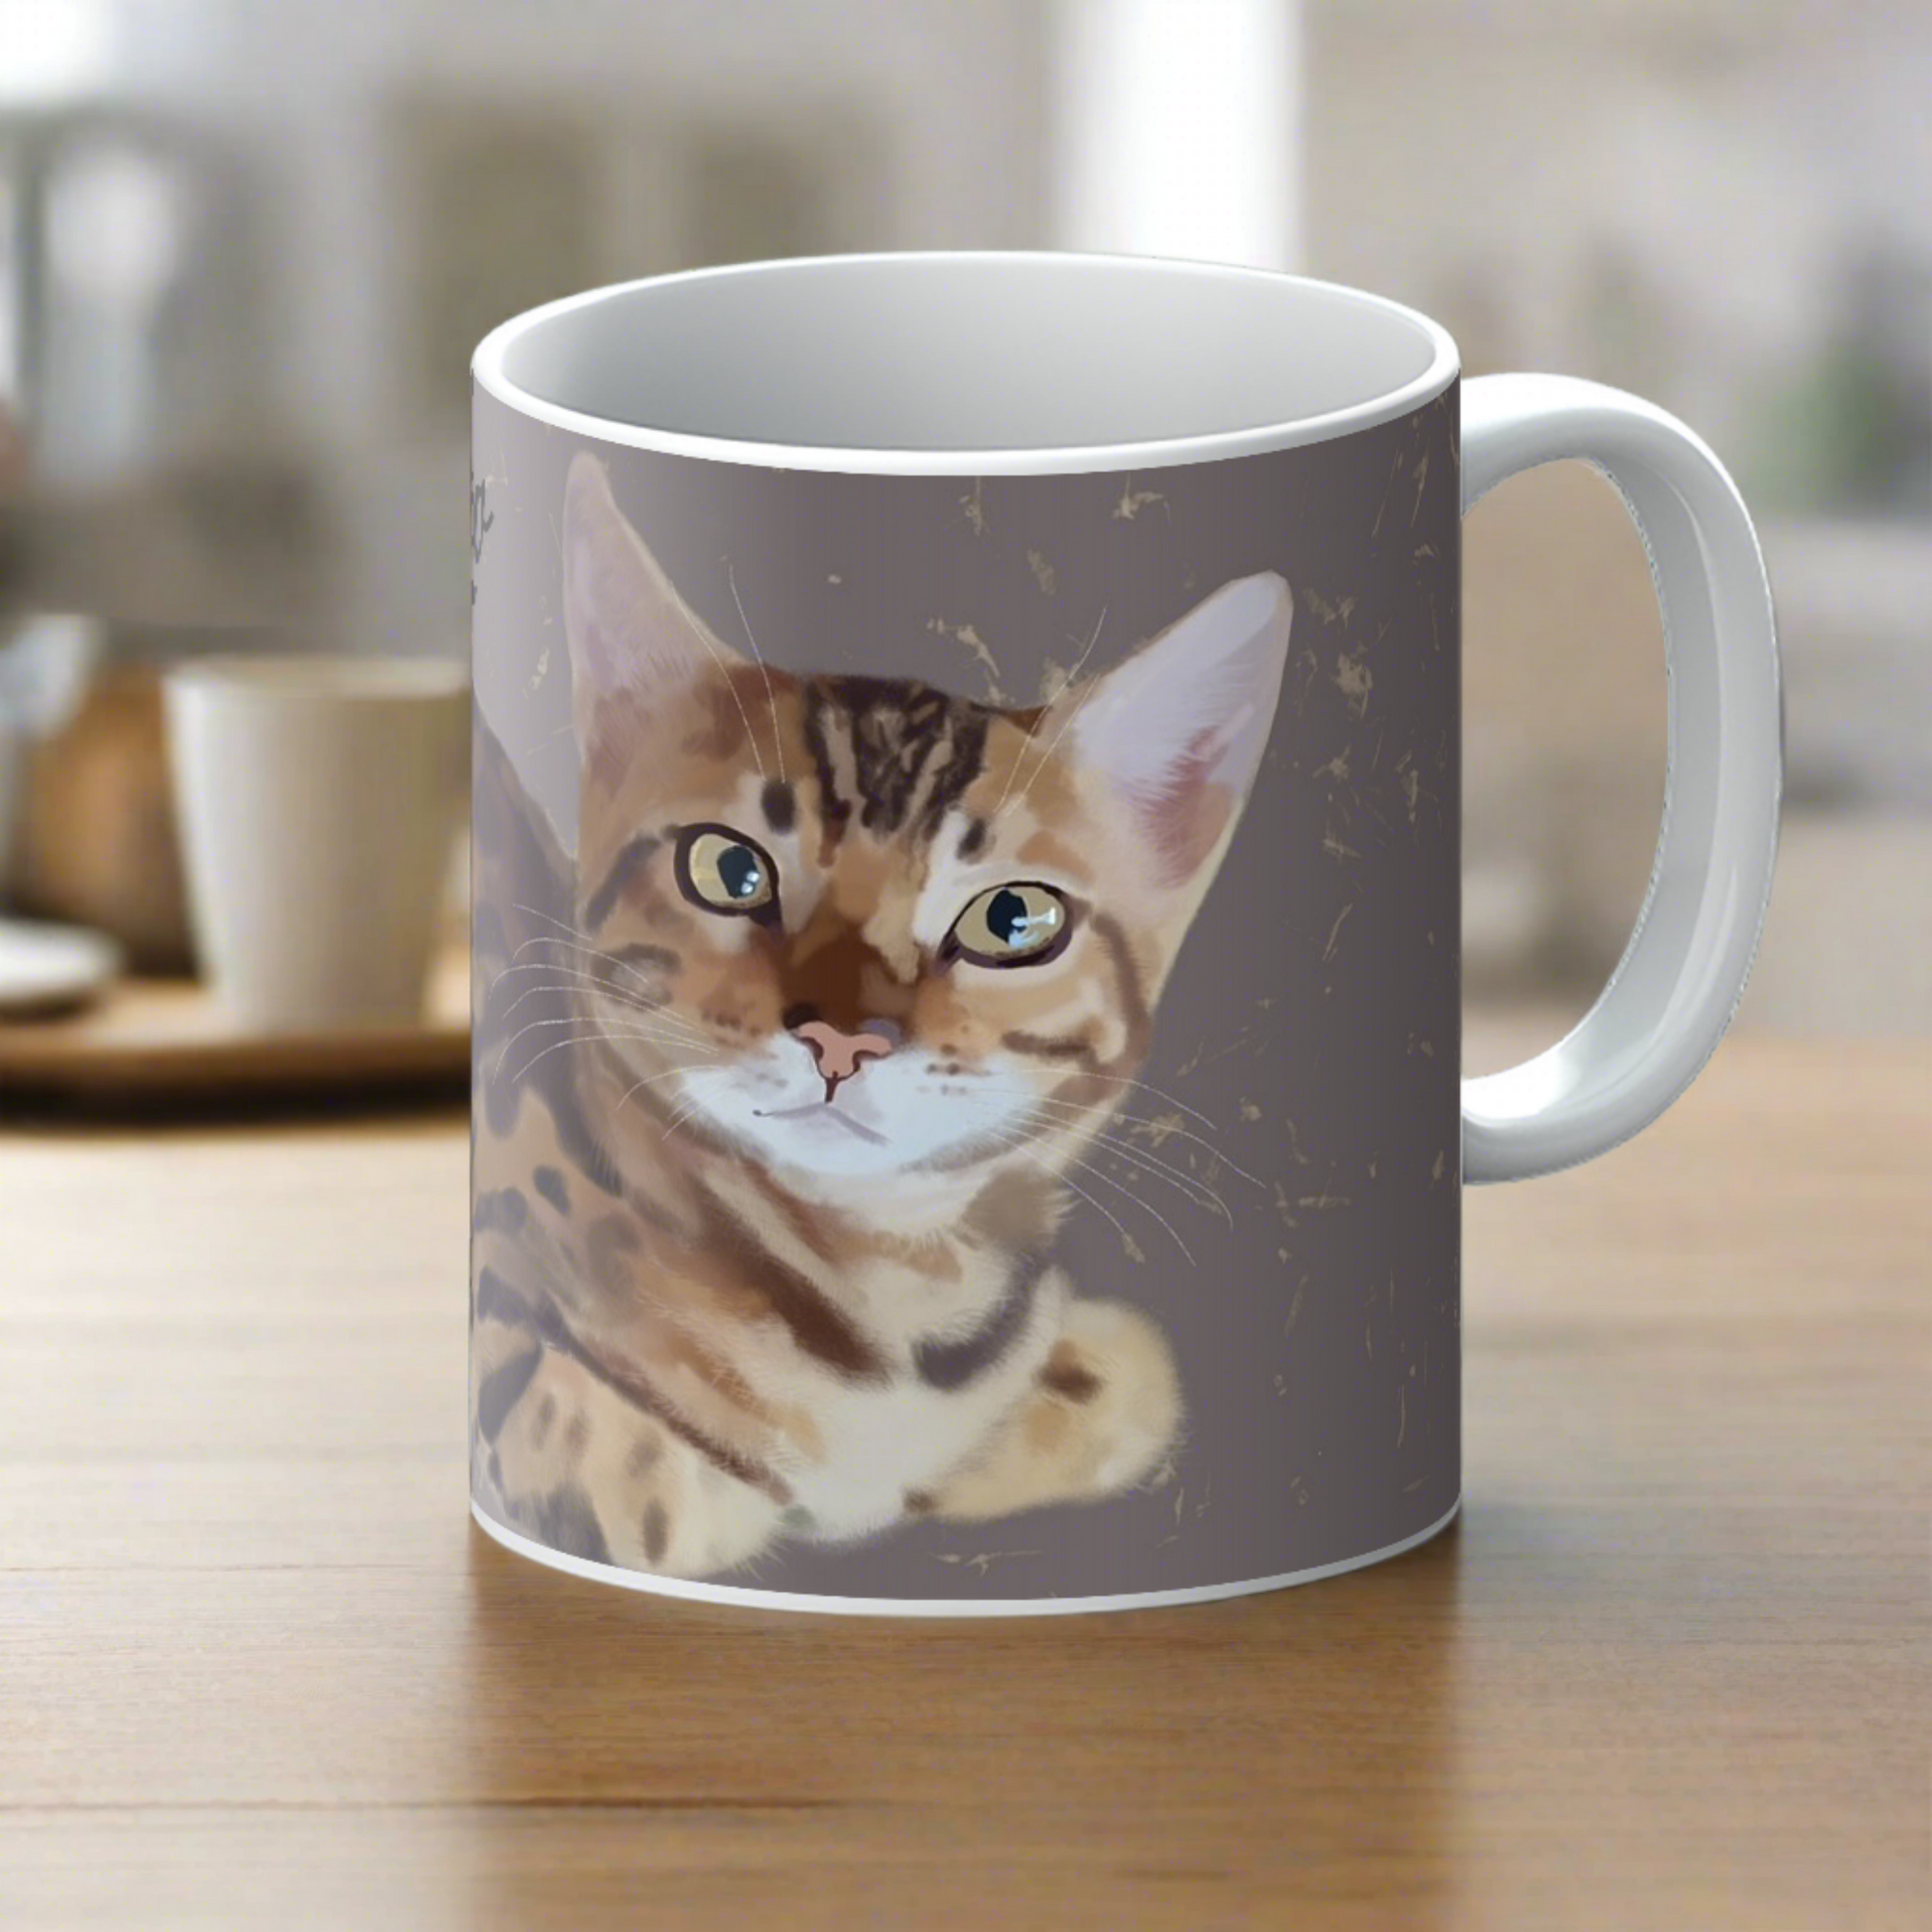 Builders mug with cat portrait